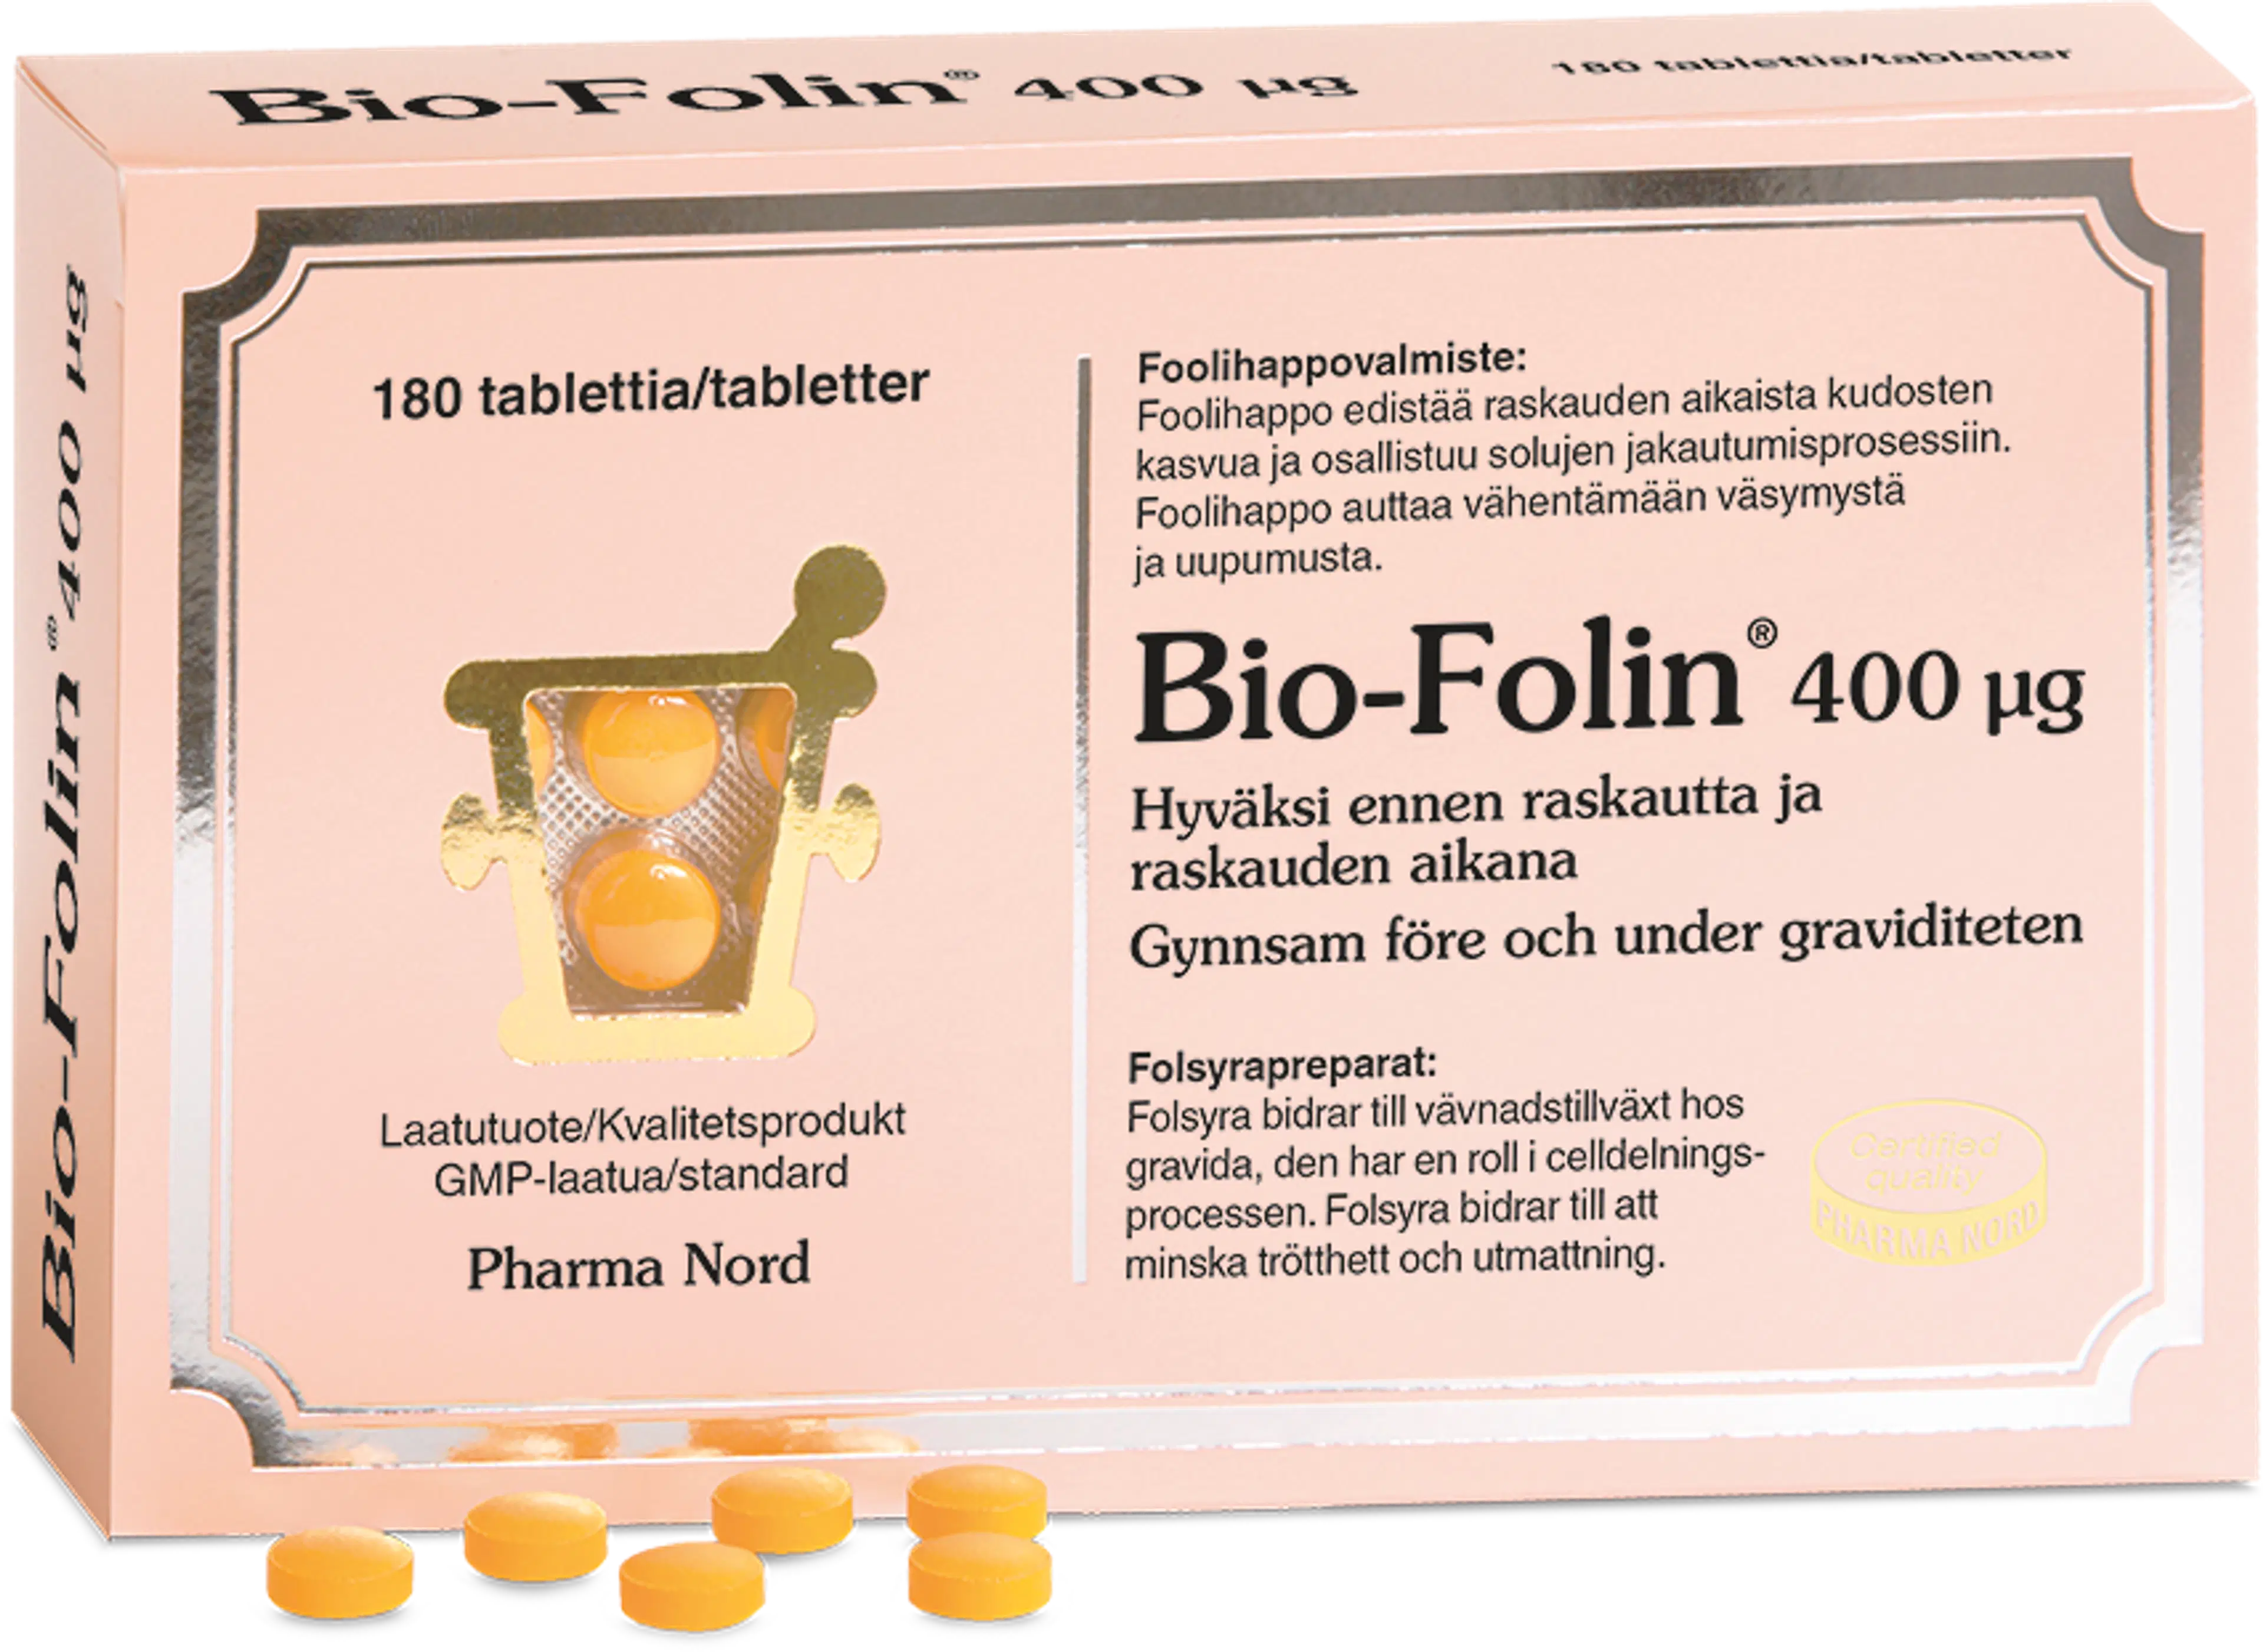 Bio-Folin® 400 mcg ravintolisä 180 tabl.